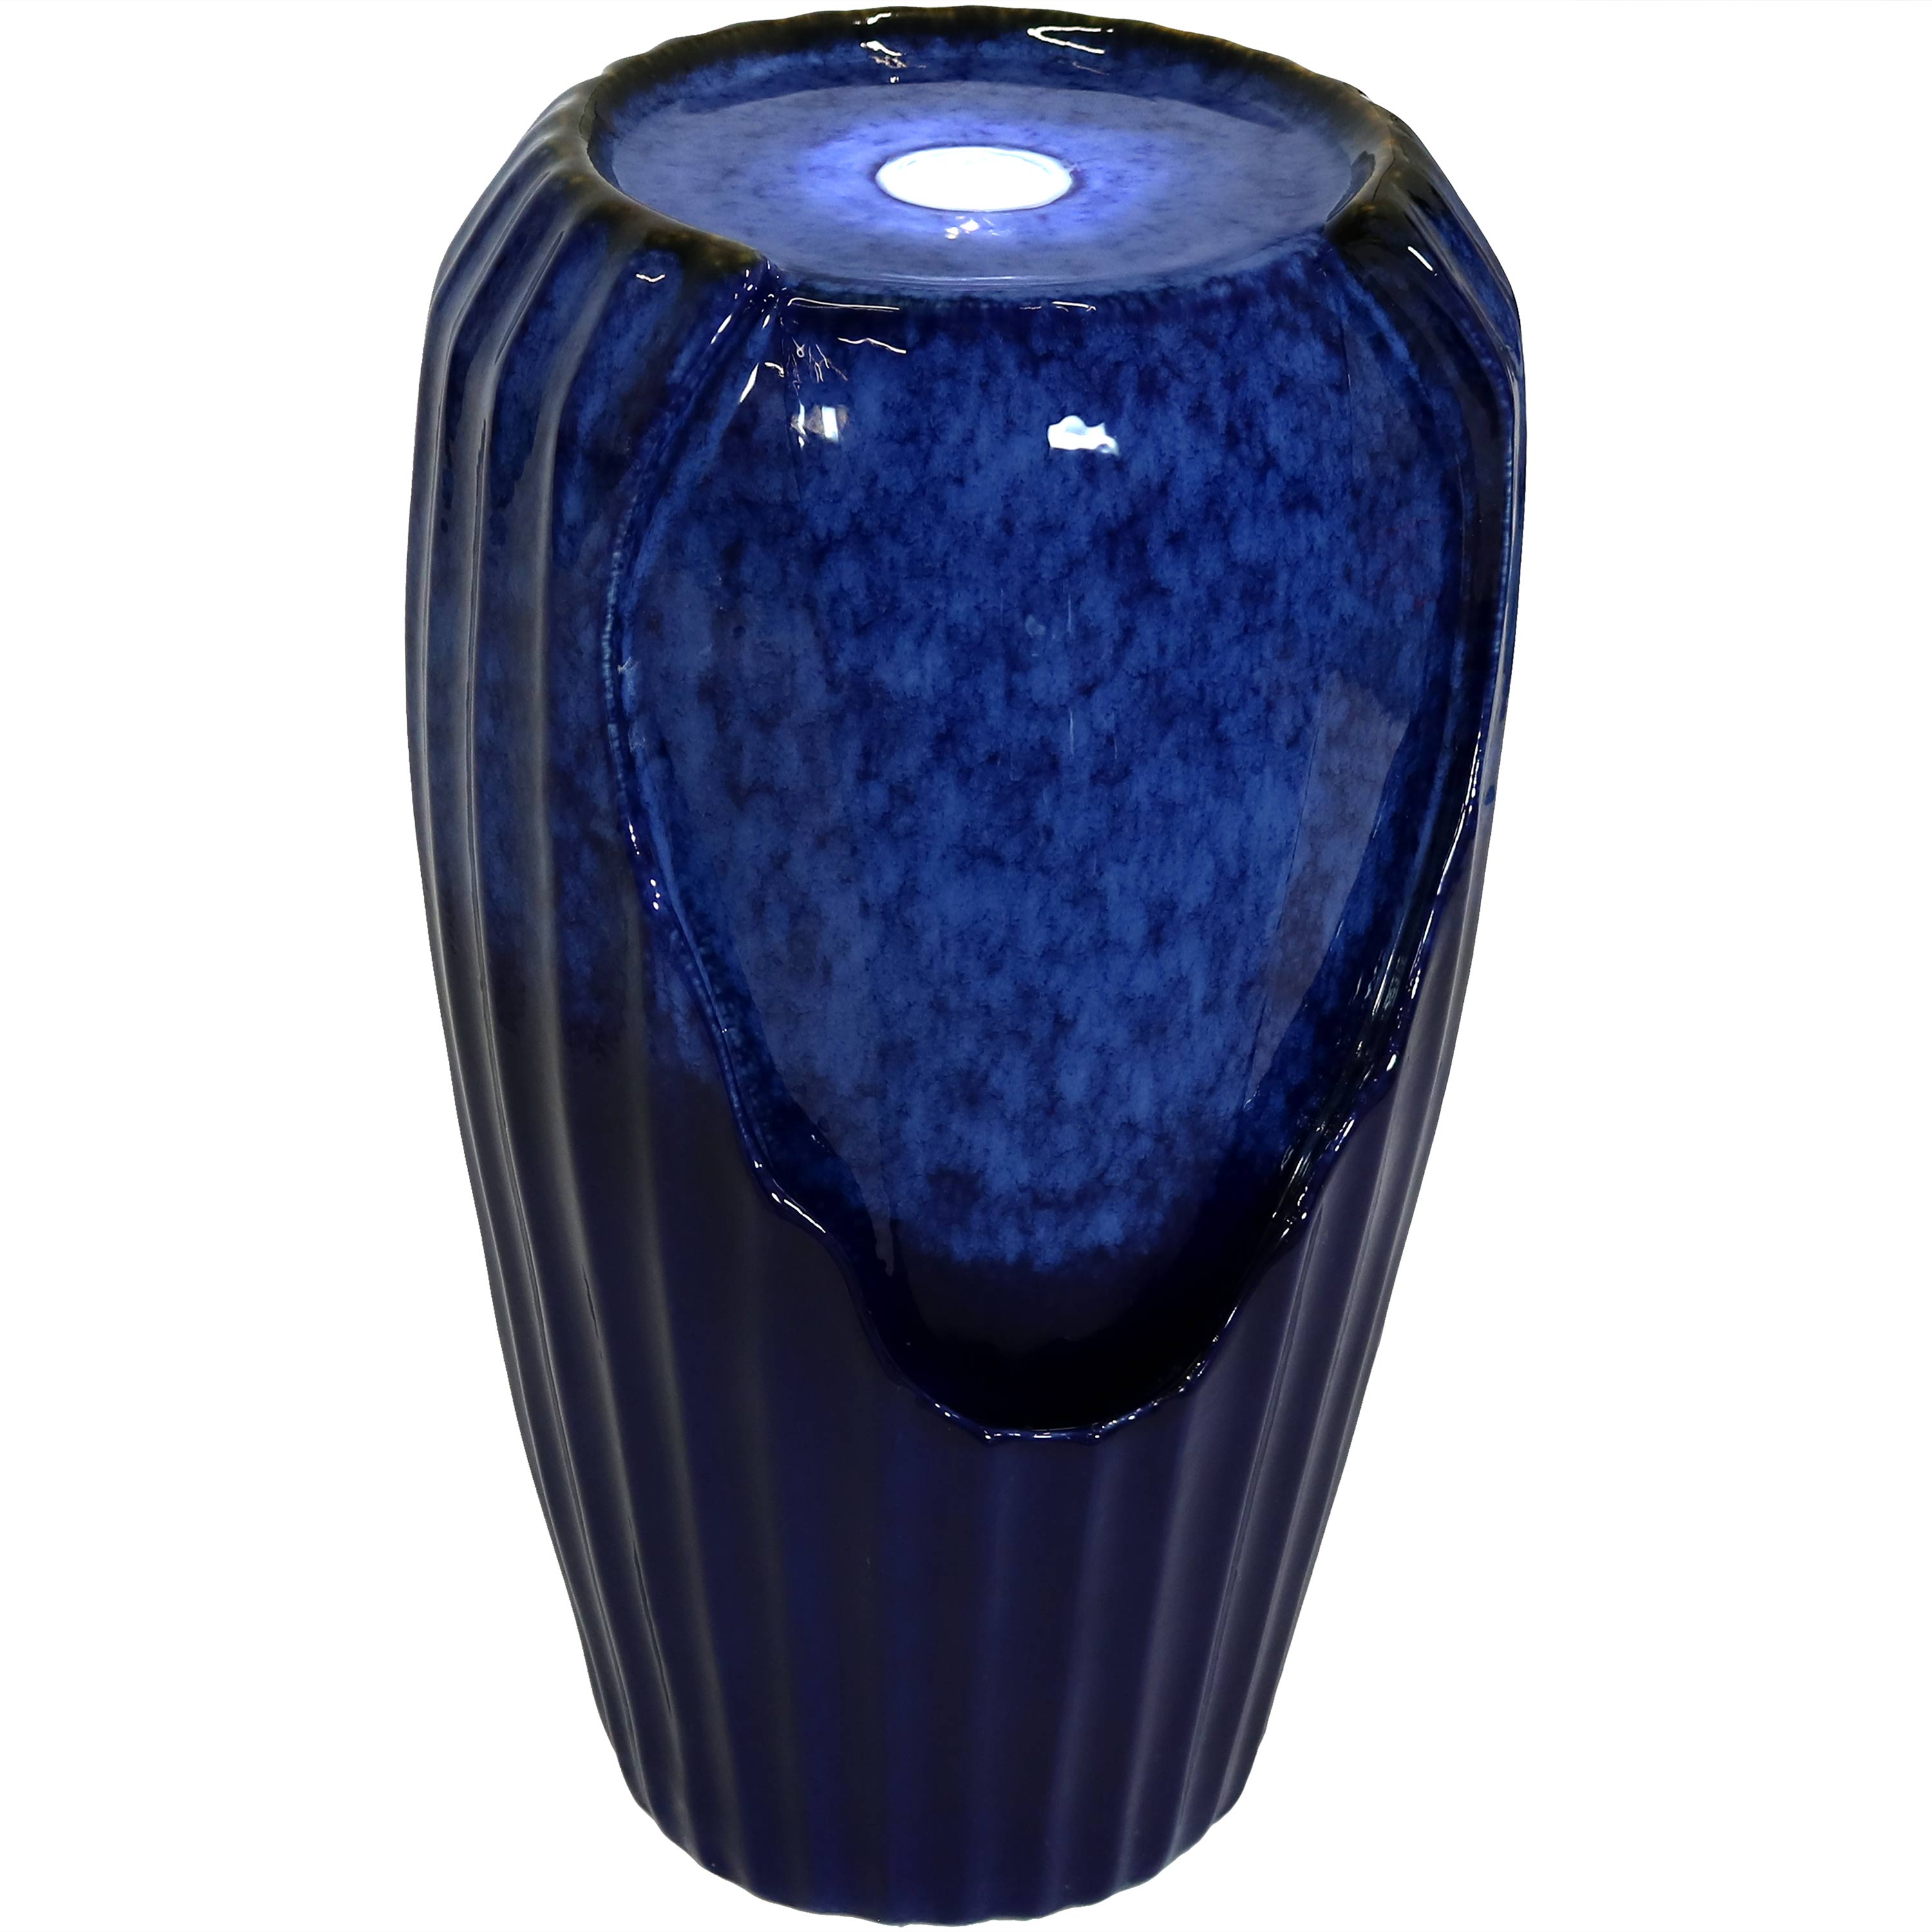 Sunnydaze Decor Blue Ceramic Vase Water Fountain with LED Lights - 22-Inch